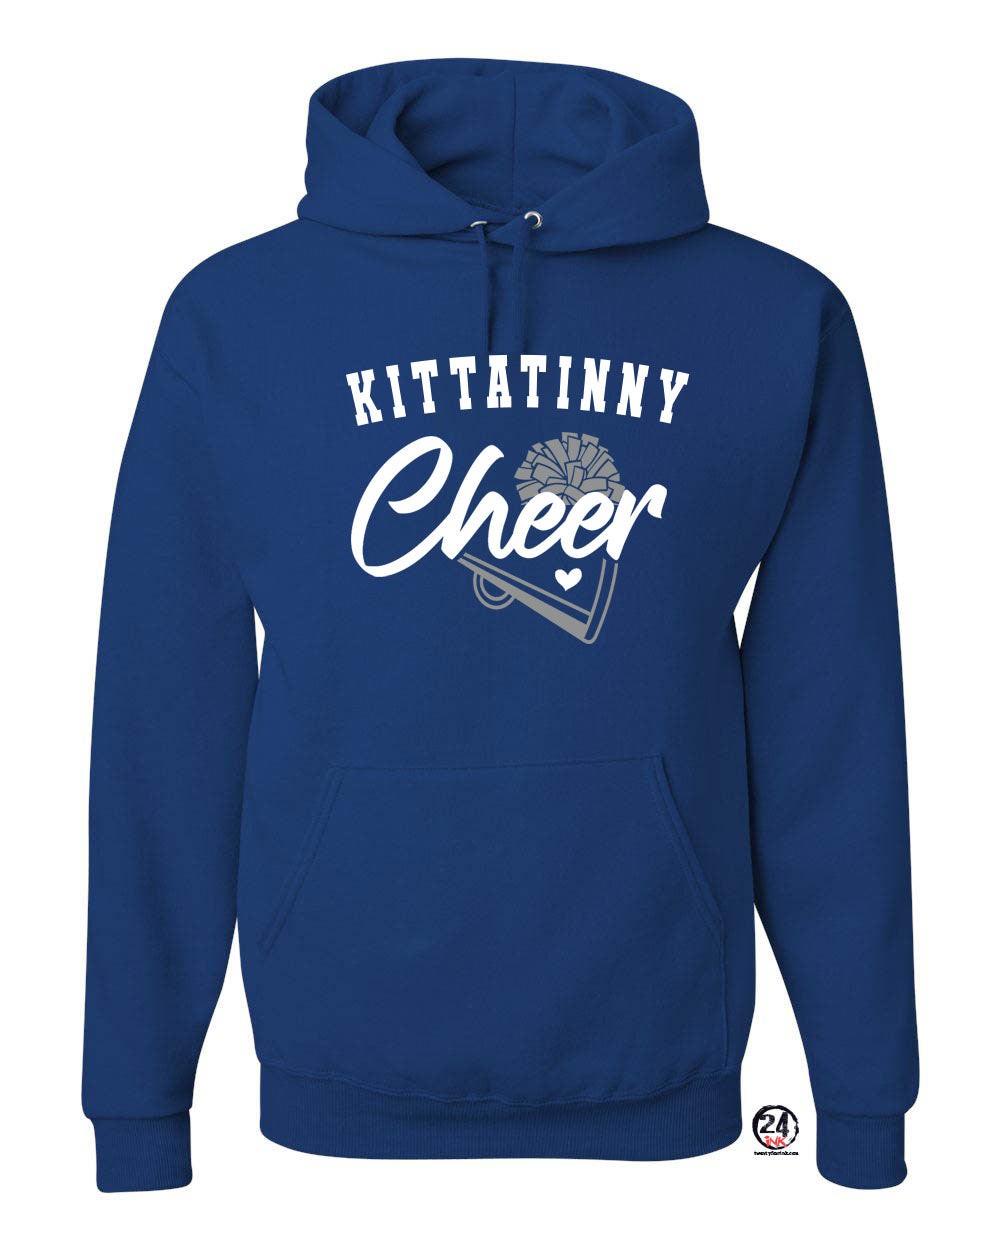 Kittatinny Cheer Design 9 Hooded Sweatshirt